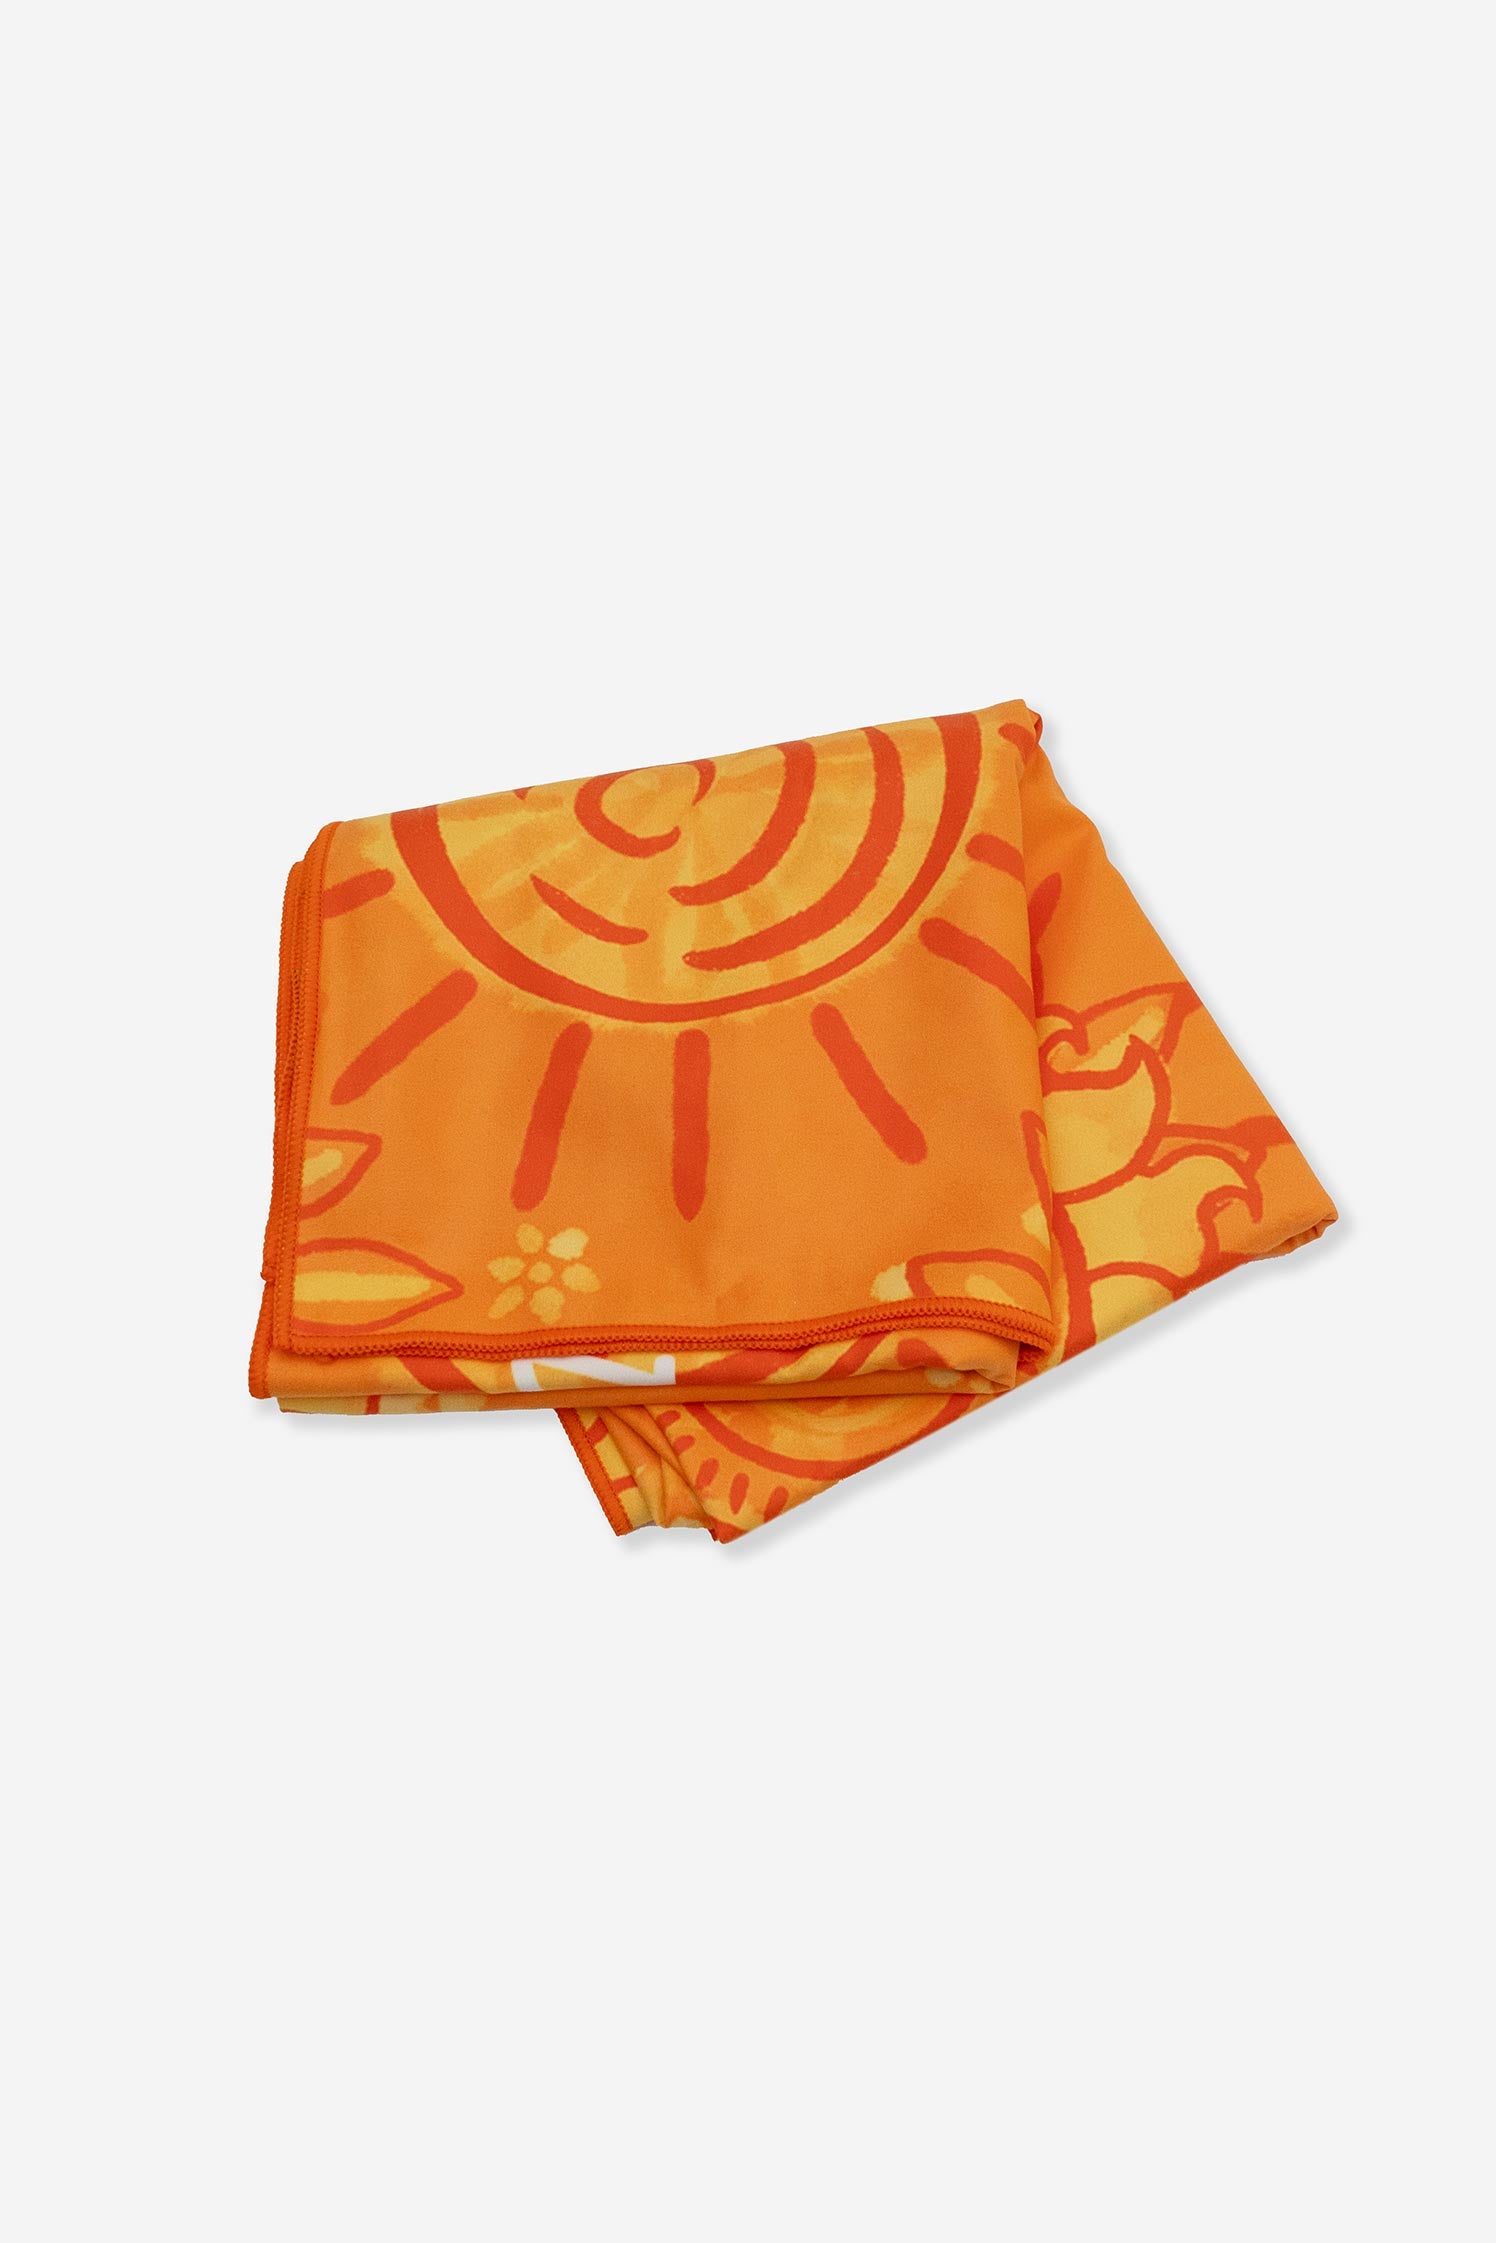 Packable Beach Towel / Mimosa